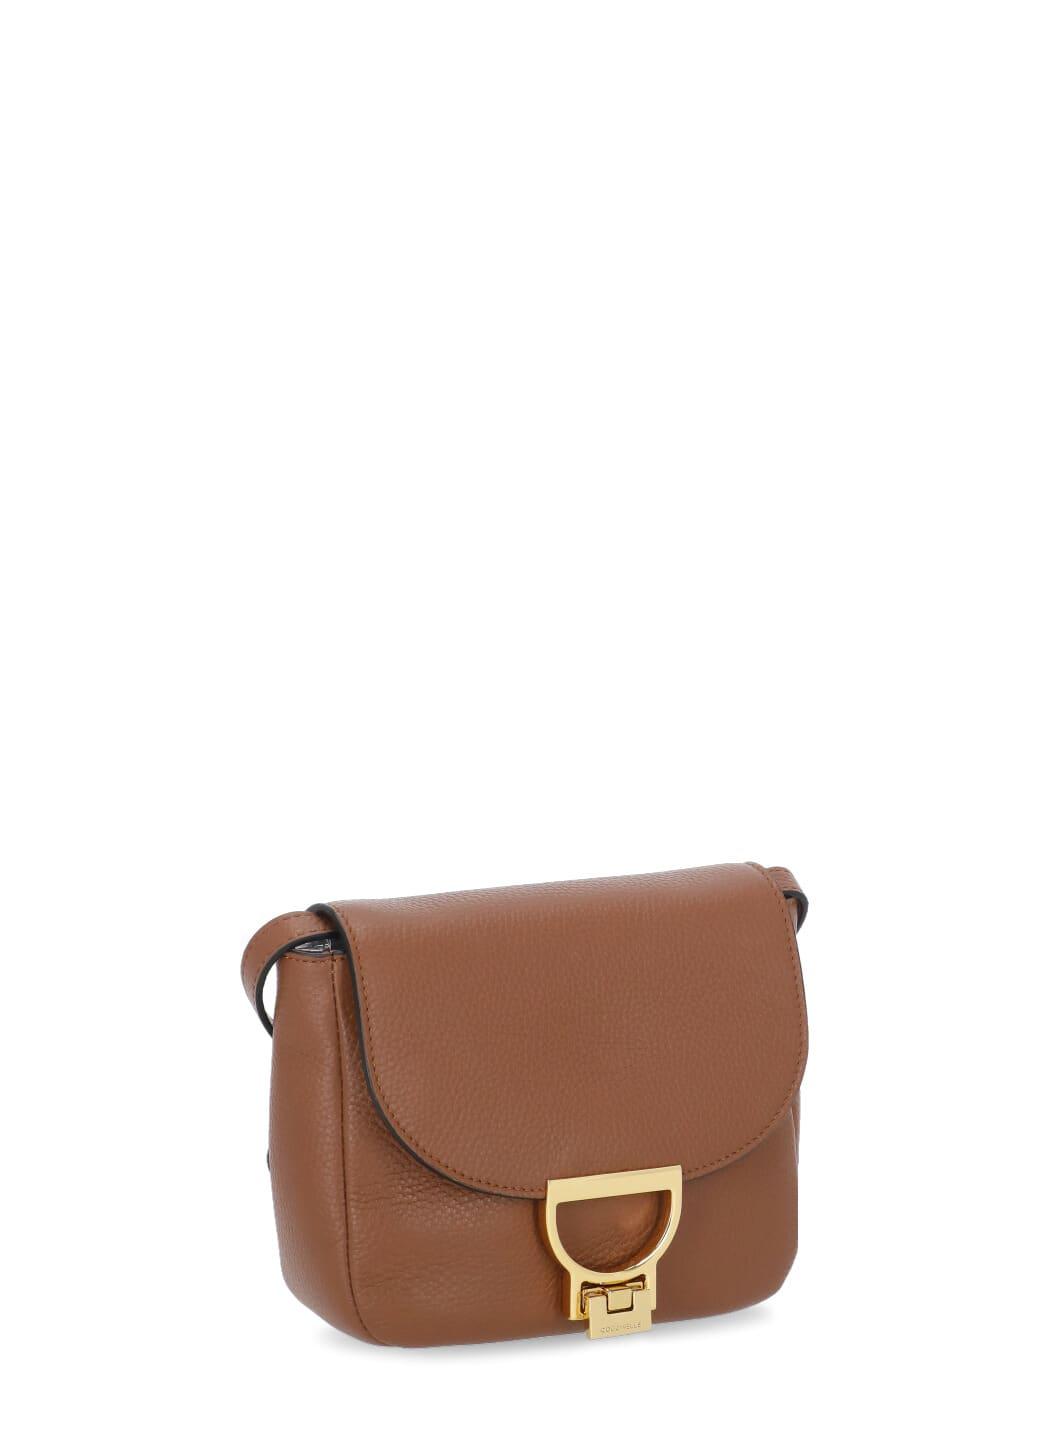 Coccinelle Arlettis Leather Shoulder Bag in Brown | Lyst